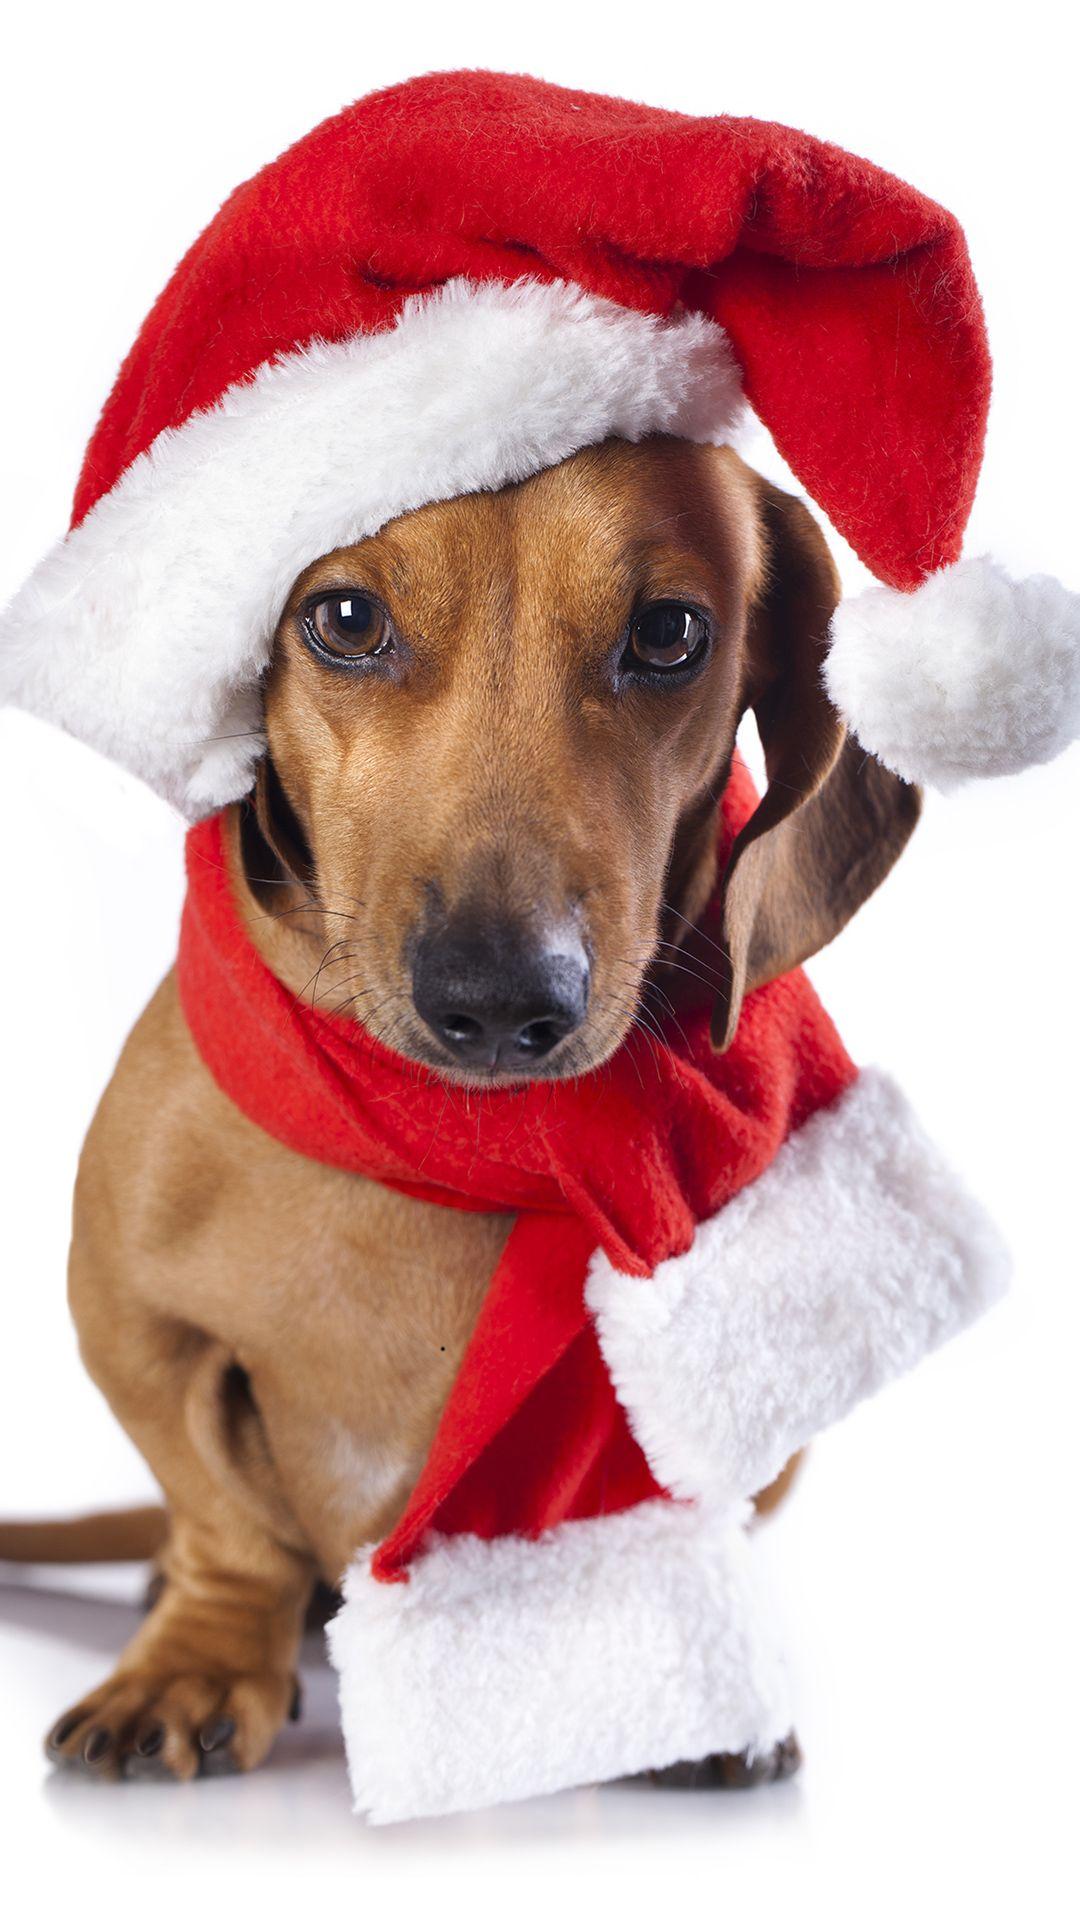 Christmas Dog iPhone 6S Plus Wallpaper